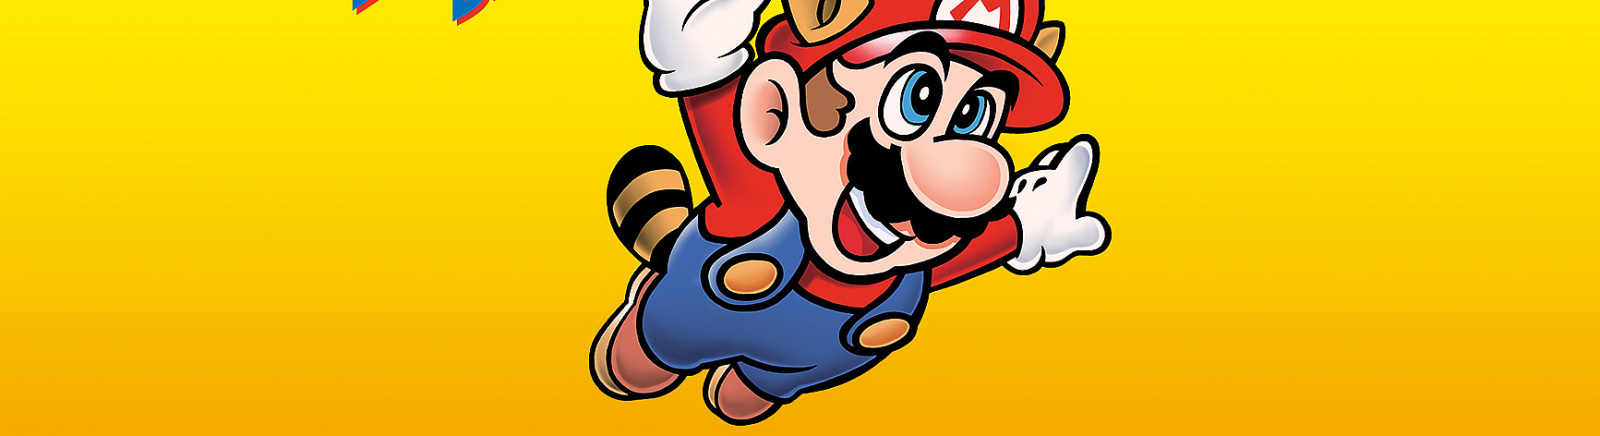 Super forums. Super Mario Advance 4: super Mario Bros. 3.